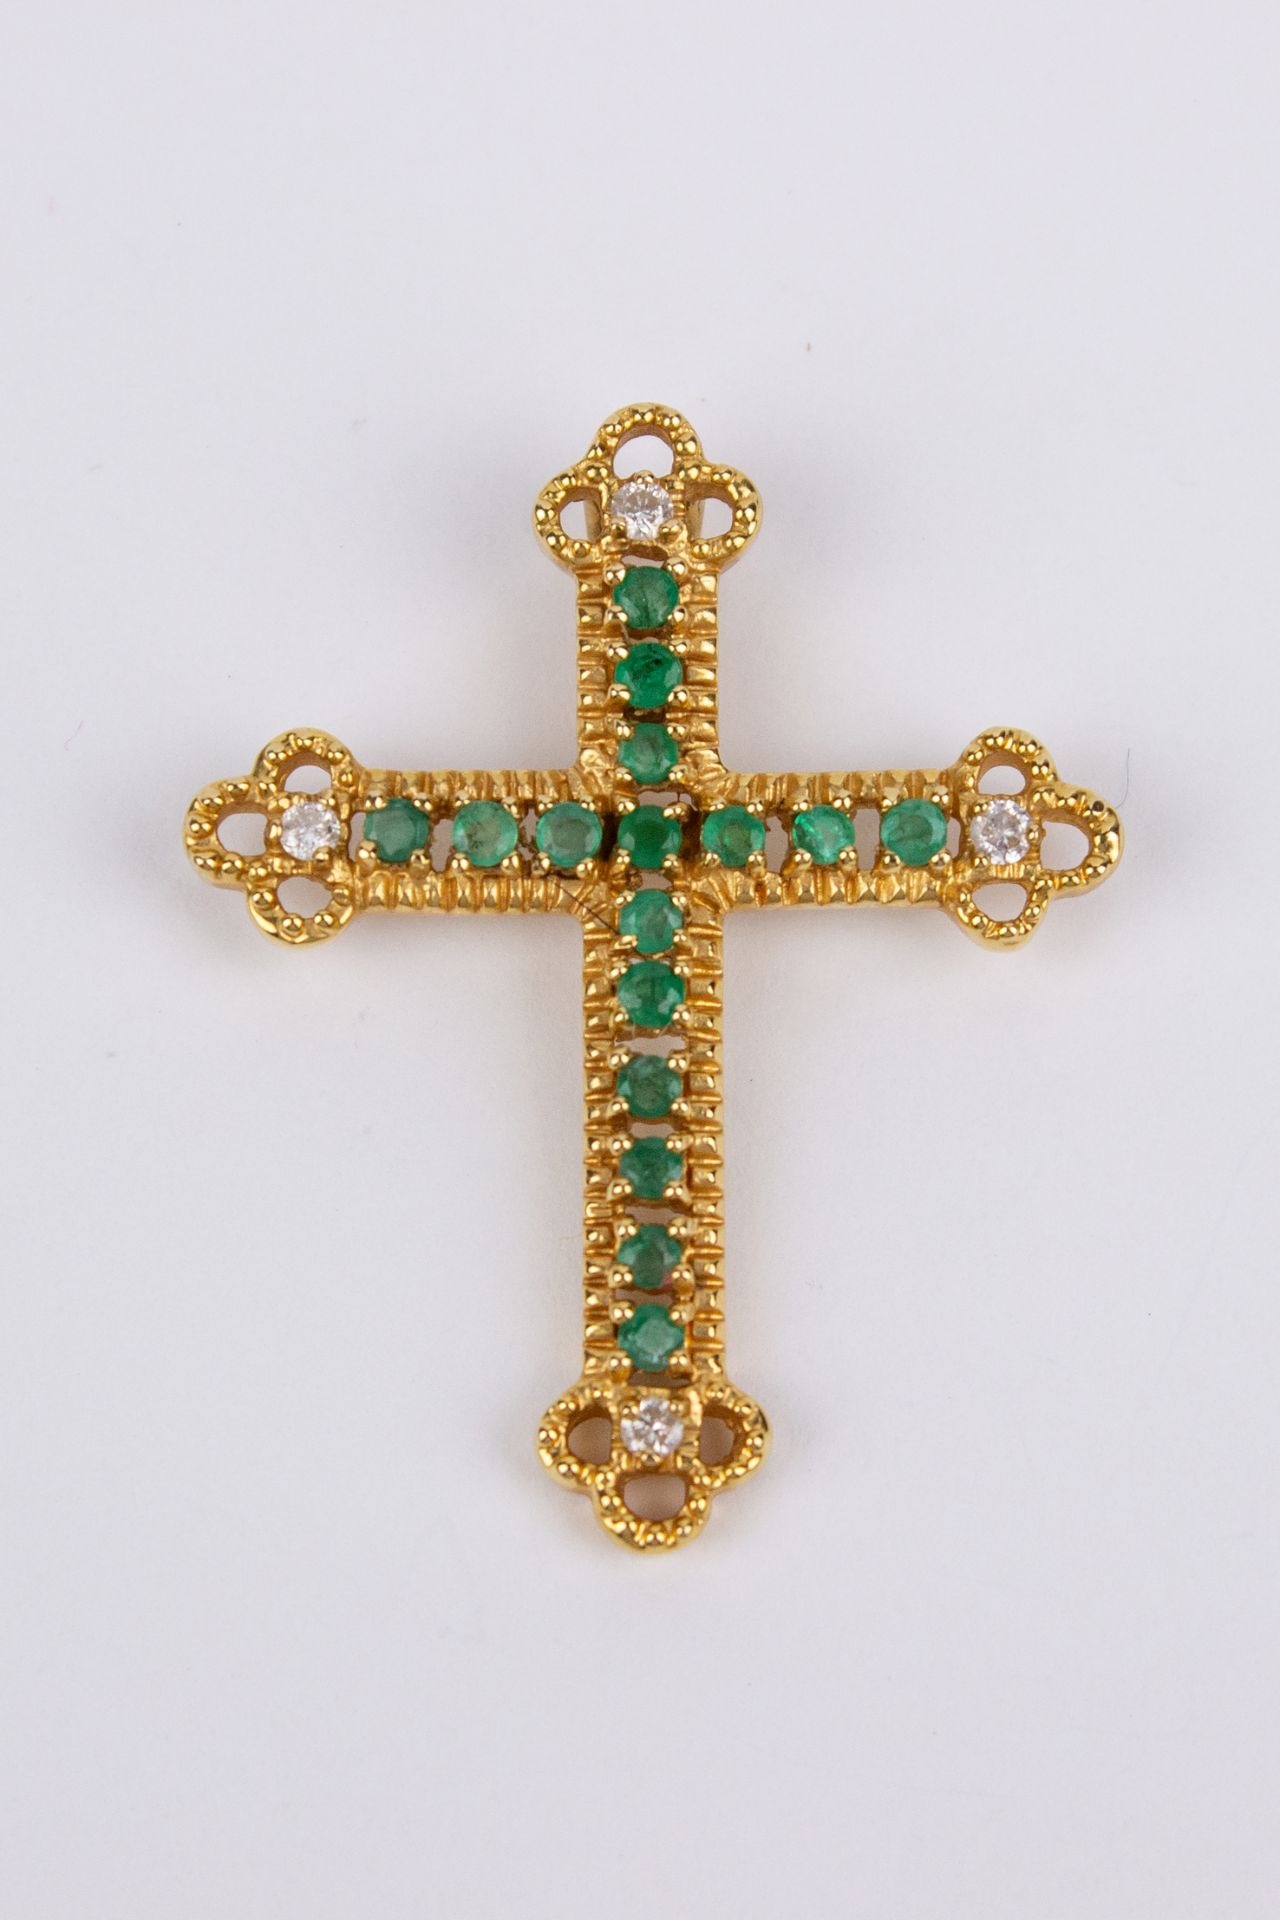 An 18k. yellow gold, brilliant cut diamonds and emeralds pendant cross